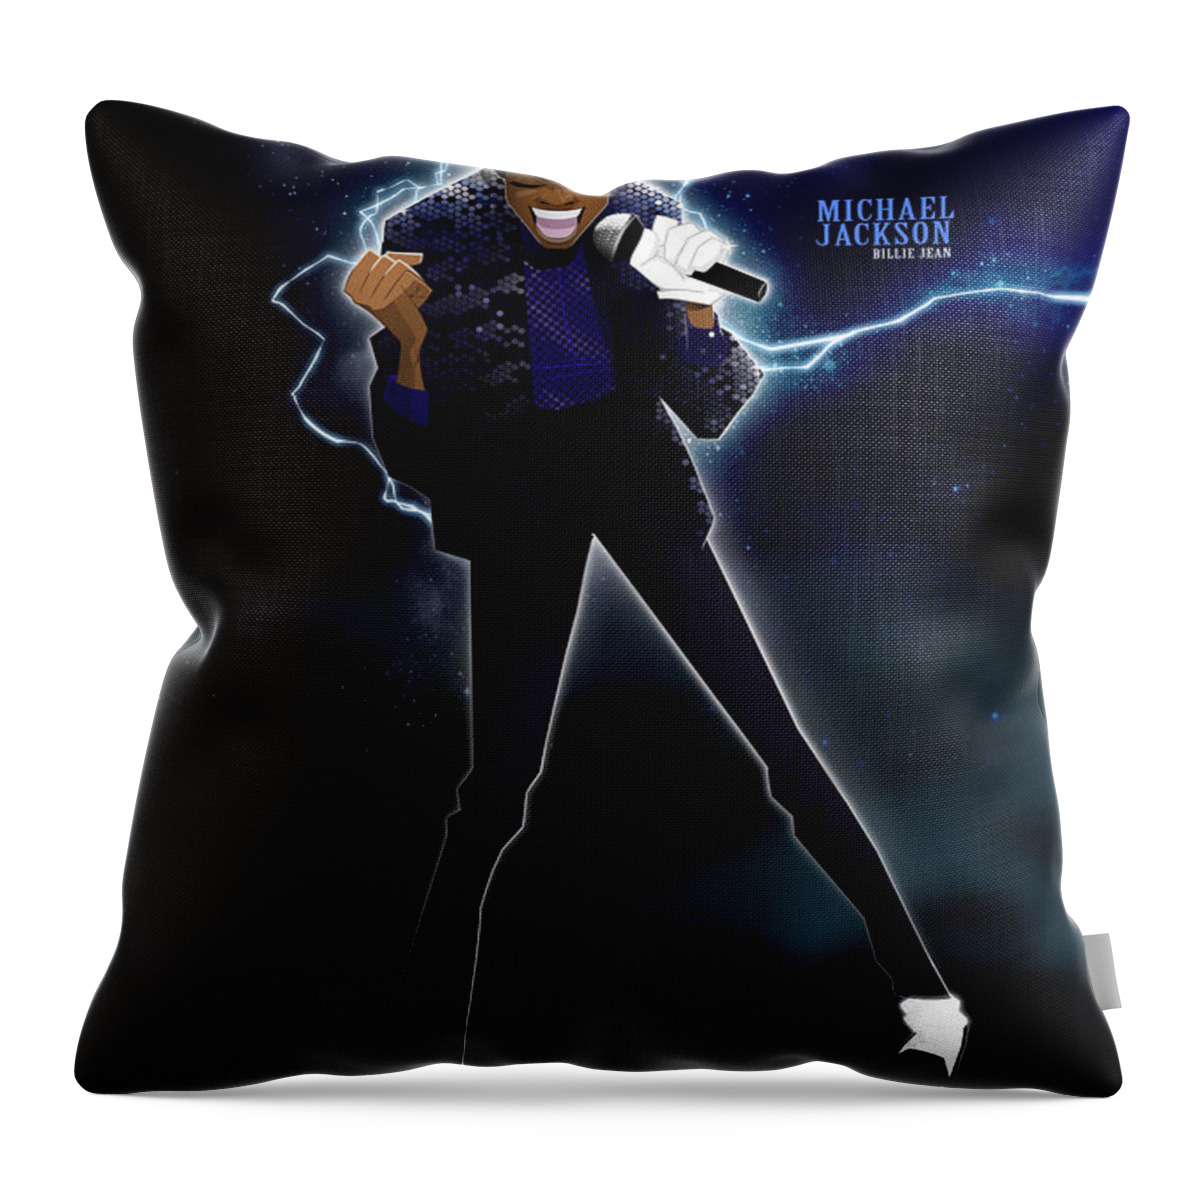 Micheal Jackson Throw Pillow featuring the digital art Billie Jean by Nelson Dedos Garcia